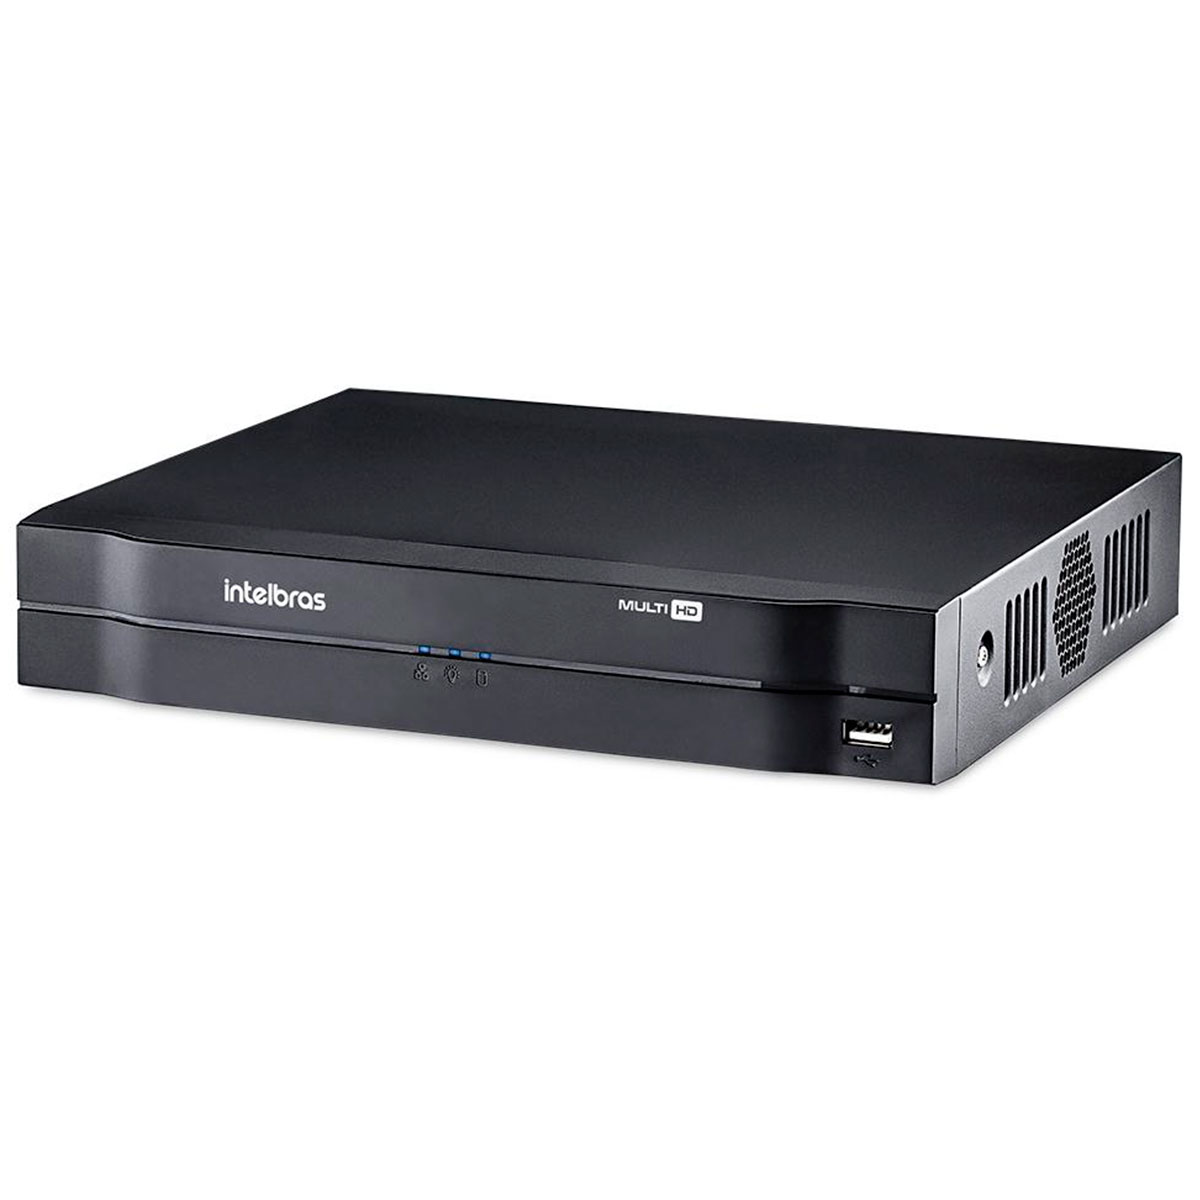 DVR 16 Canais Intelbras MHDX 1116 - Gravador Digital - Multi HD - IP, HDCVI, HDTVI, AHD